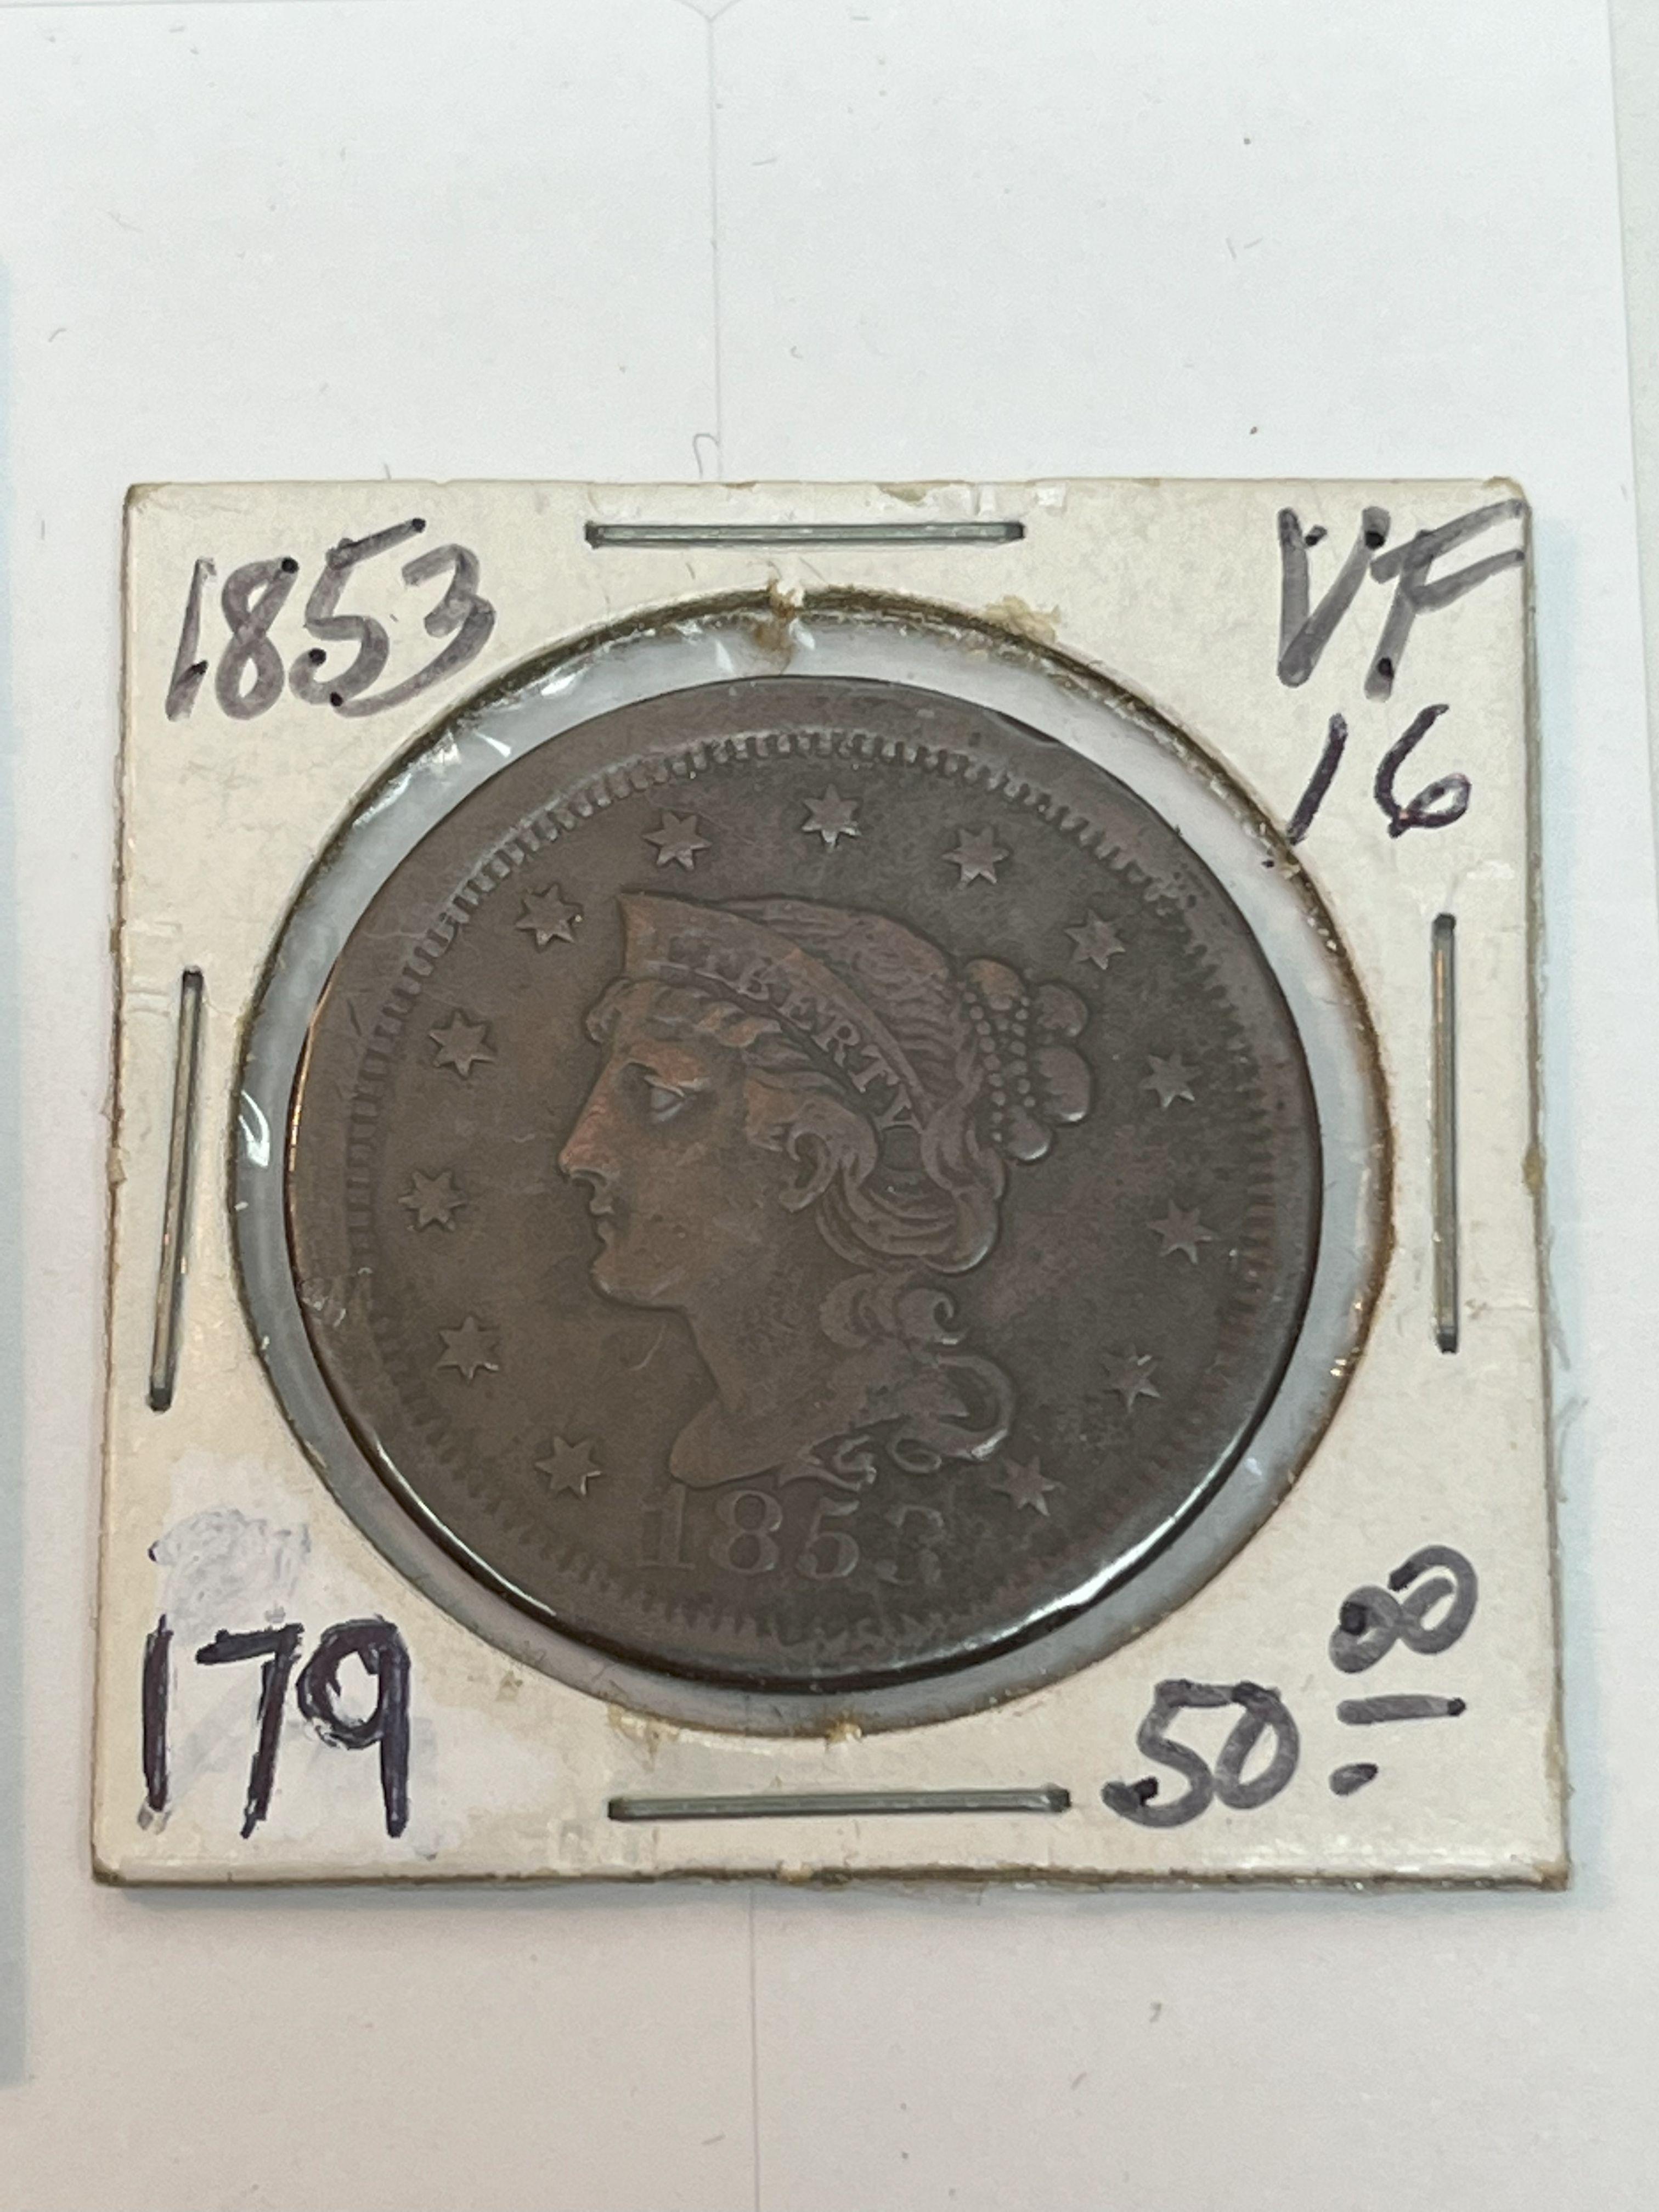 1853 Large Cent - VF16